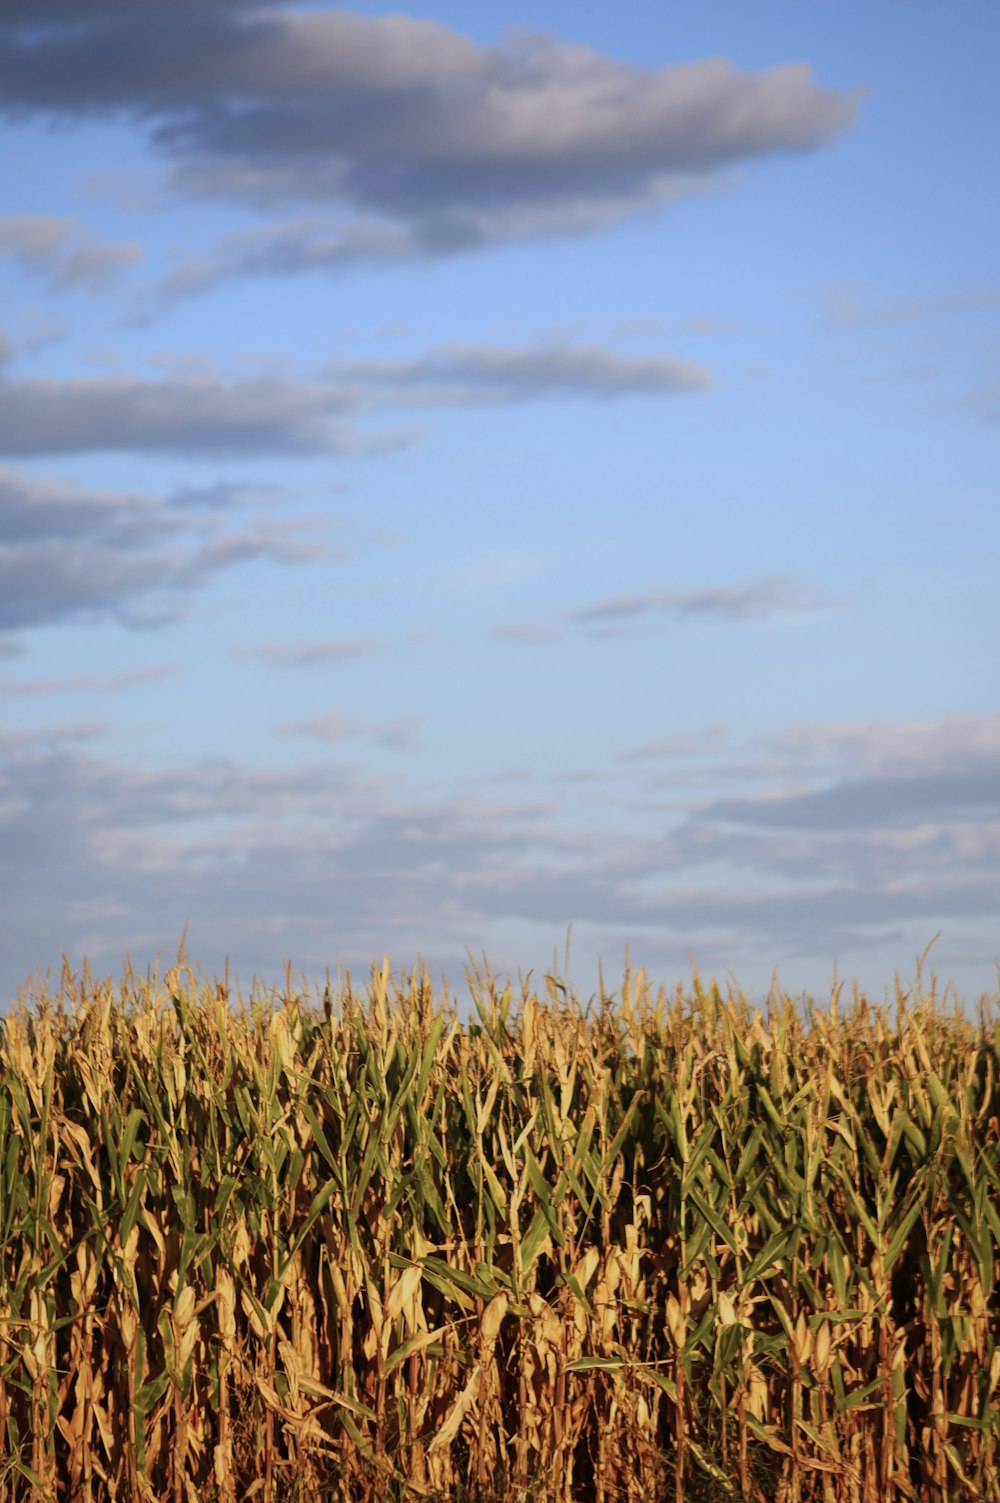 a field of corn under a cloudy blue sky